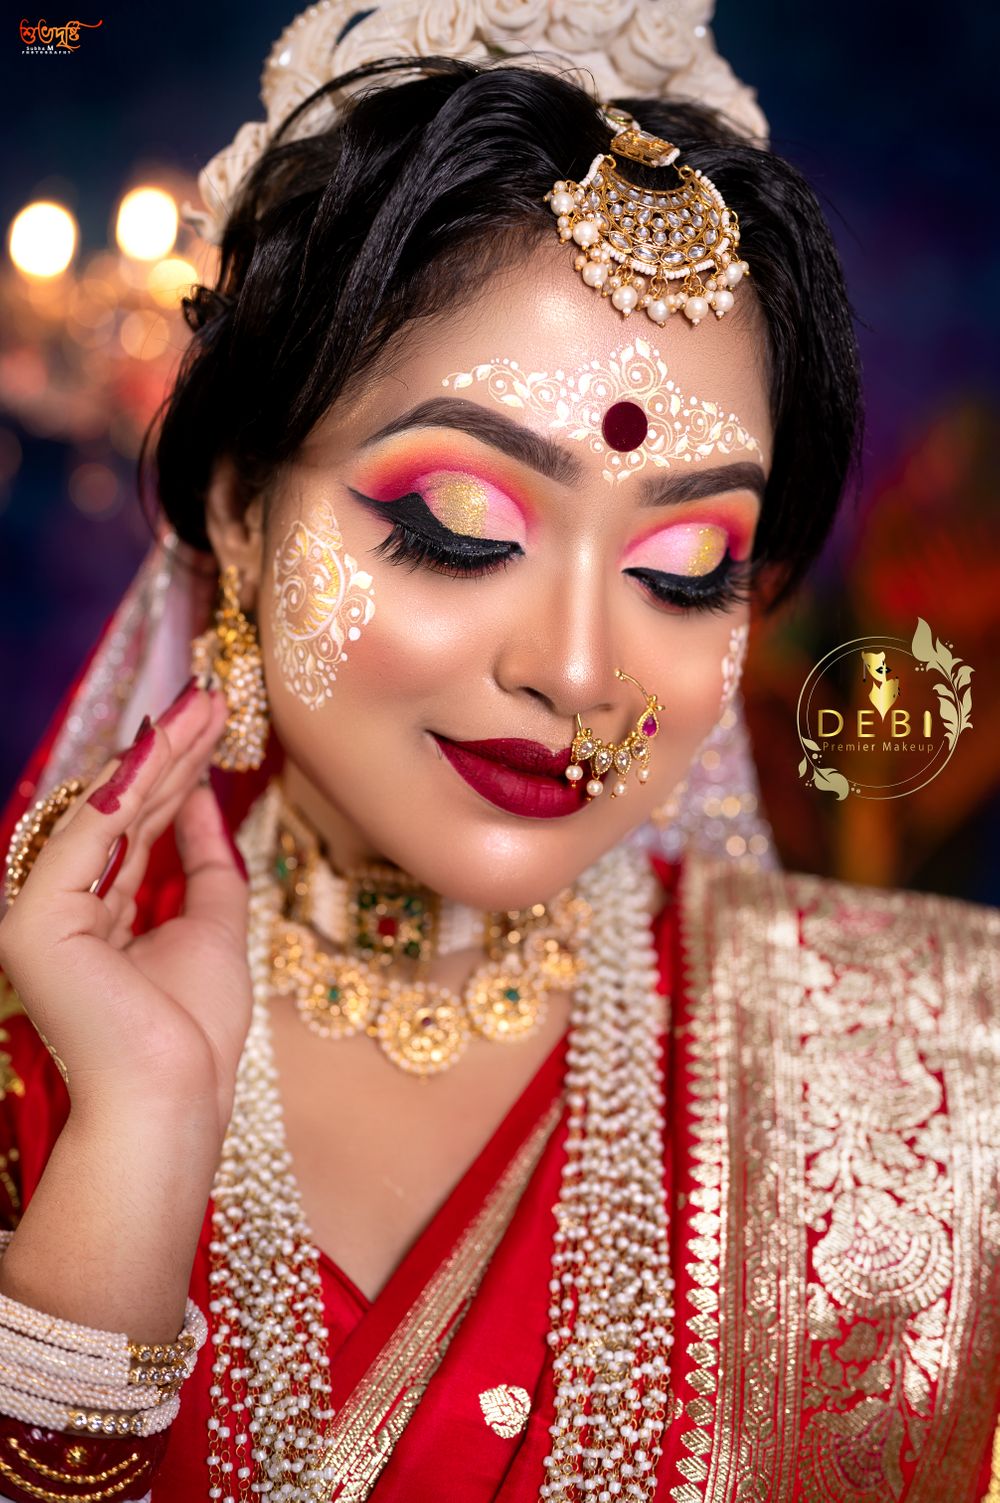 Photo From Moumita's ultra sweet bridal makeup - By Debi's Premier Makeup